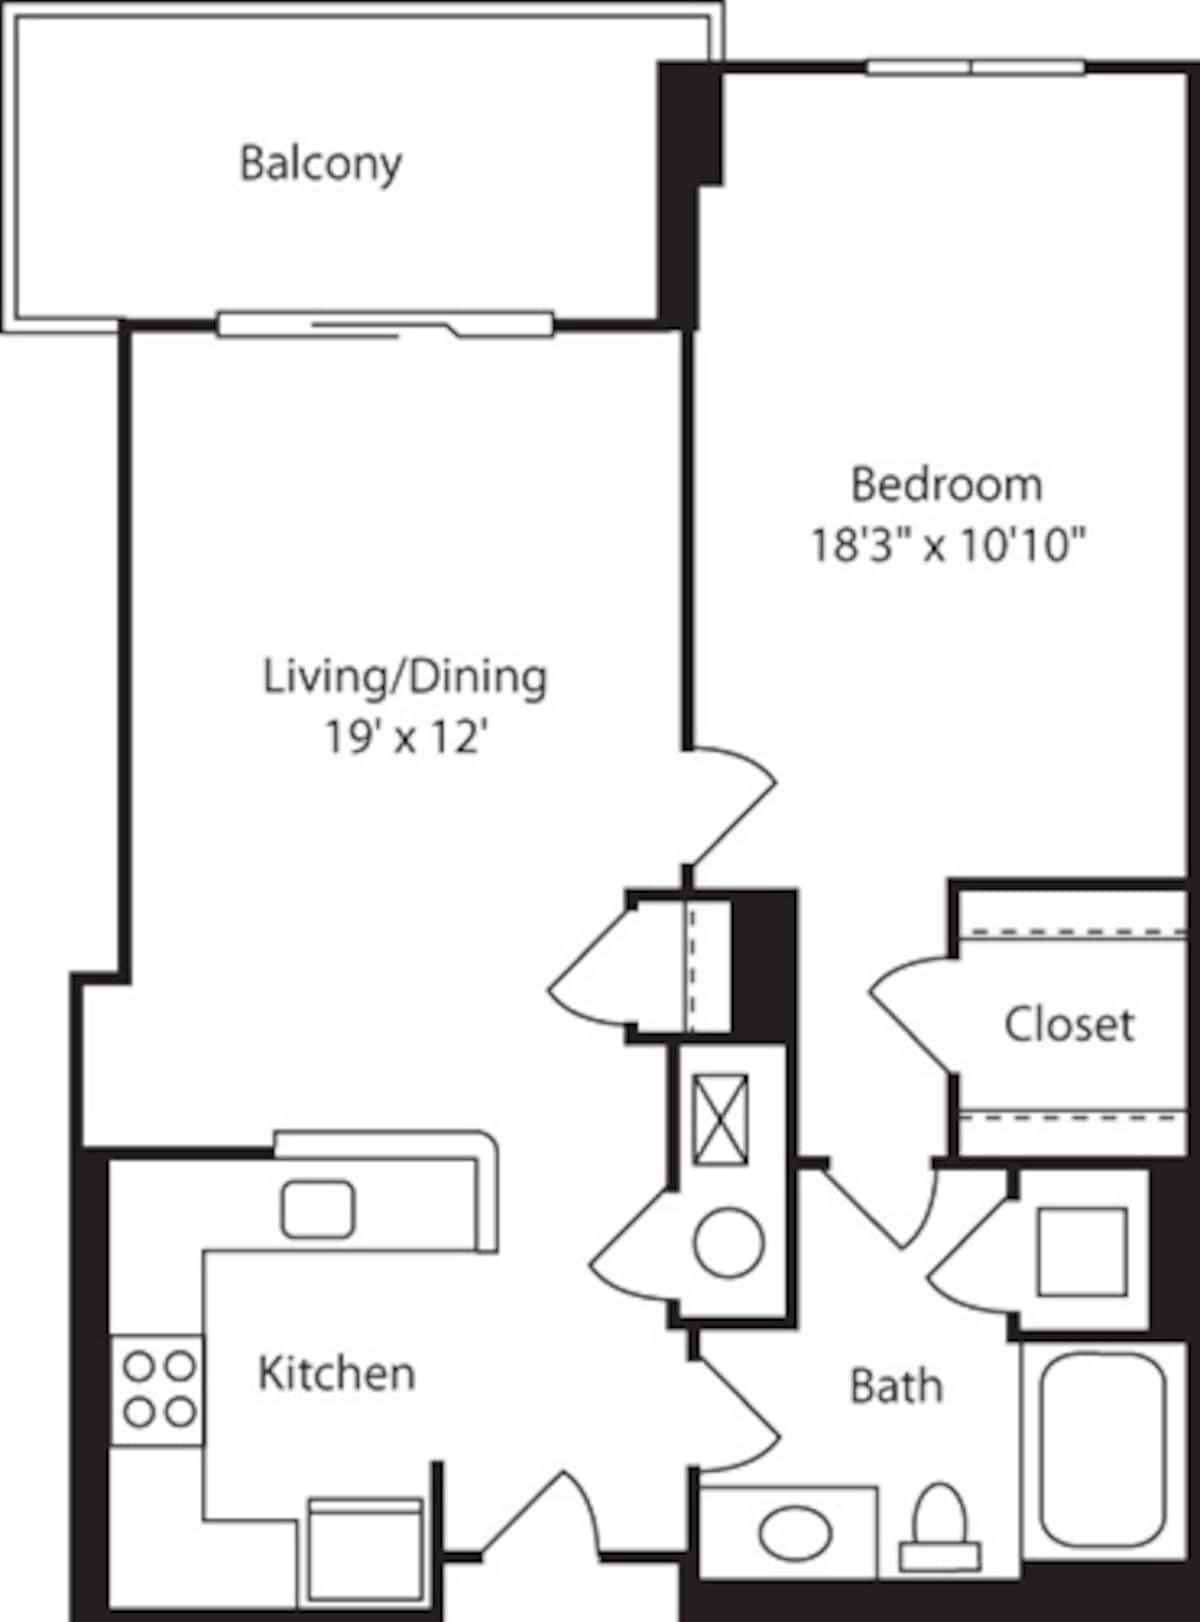 Floorplan diagram for B4, showing 1 bedroom